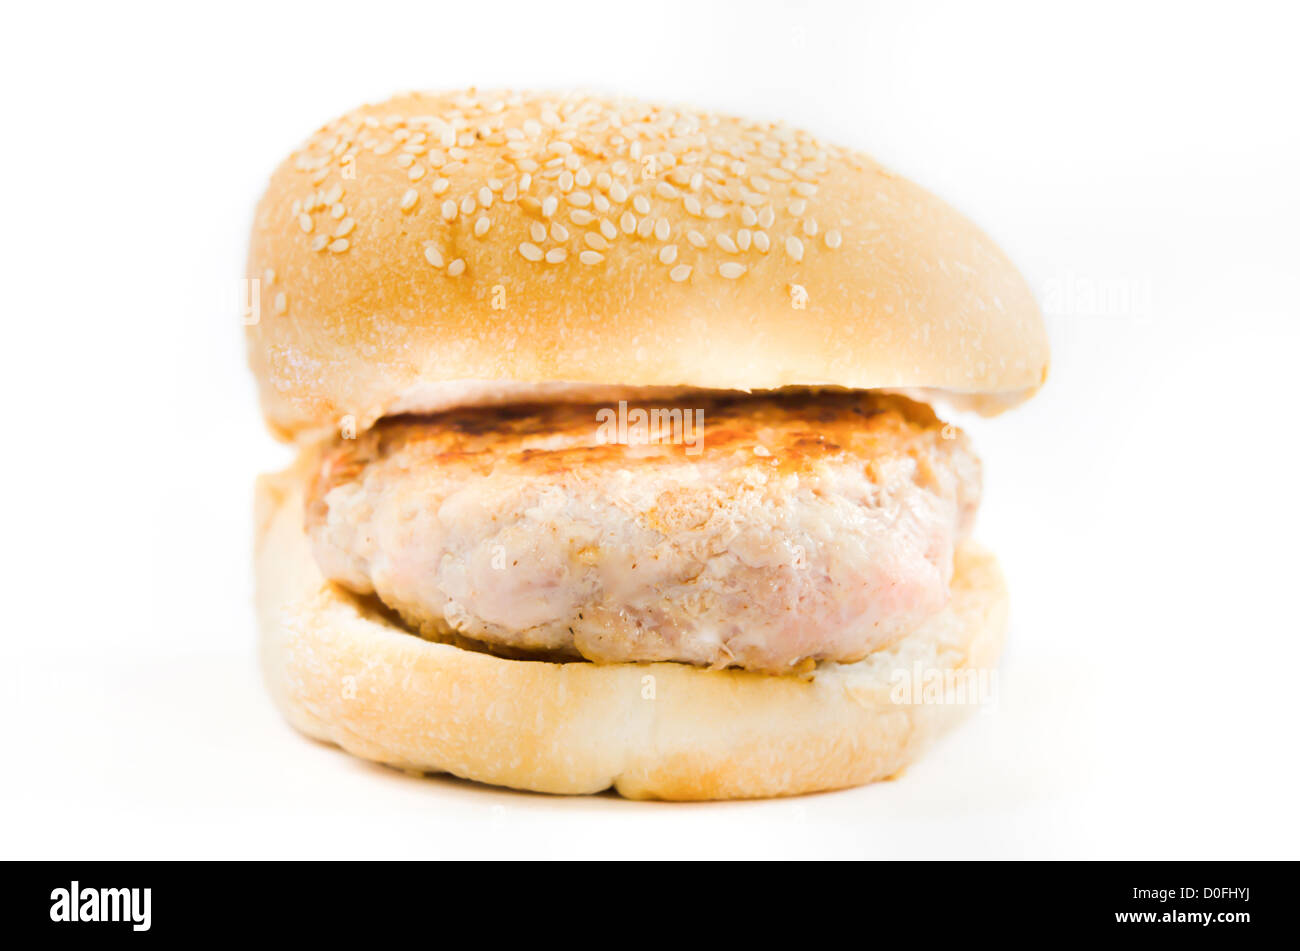 bun and fride pork no vegetable , fast food burger Stock Photo